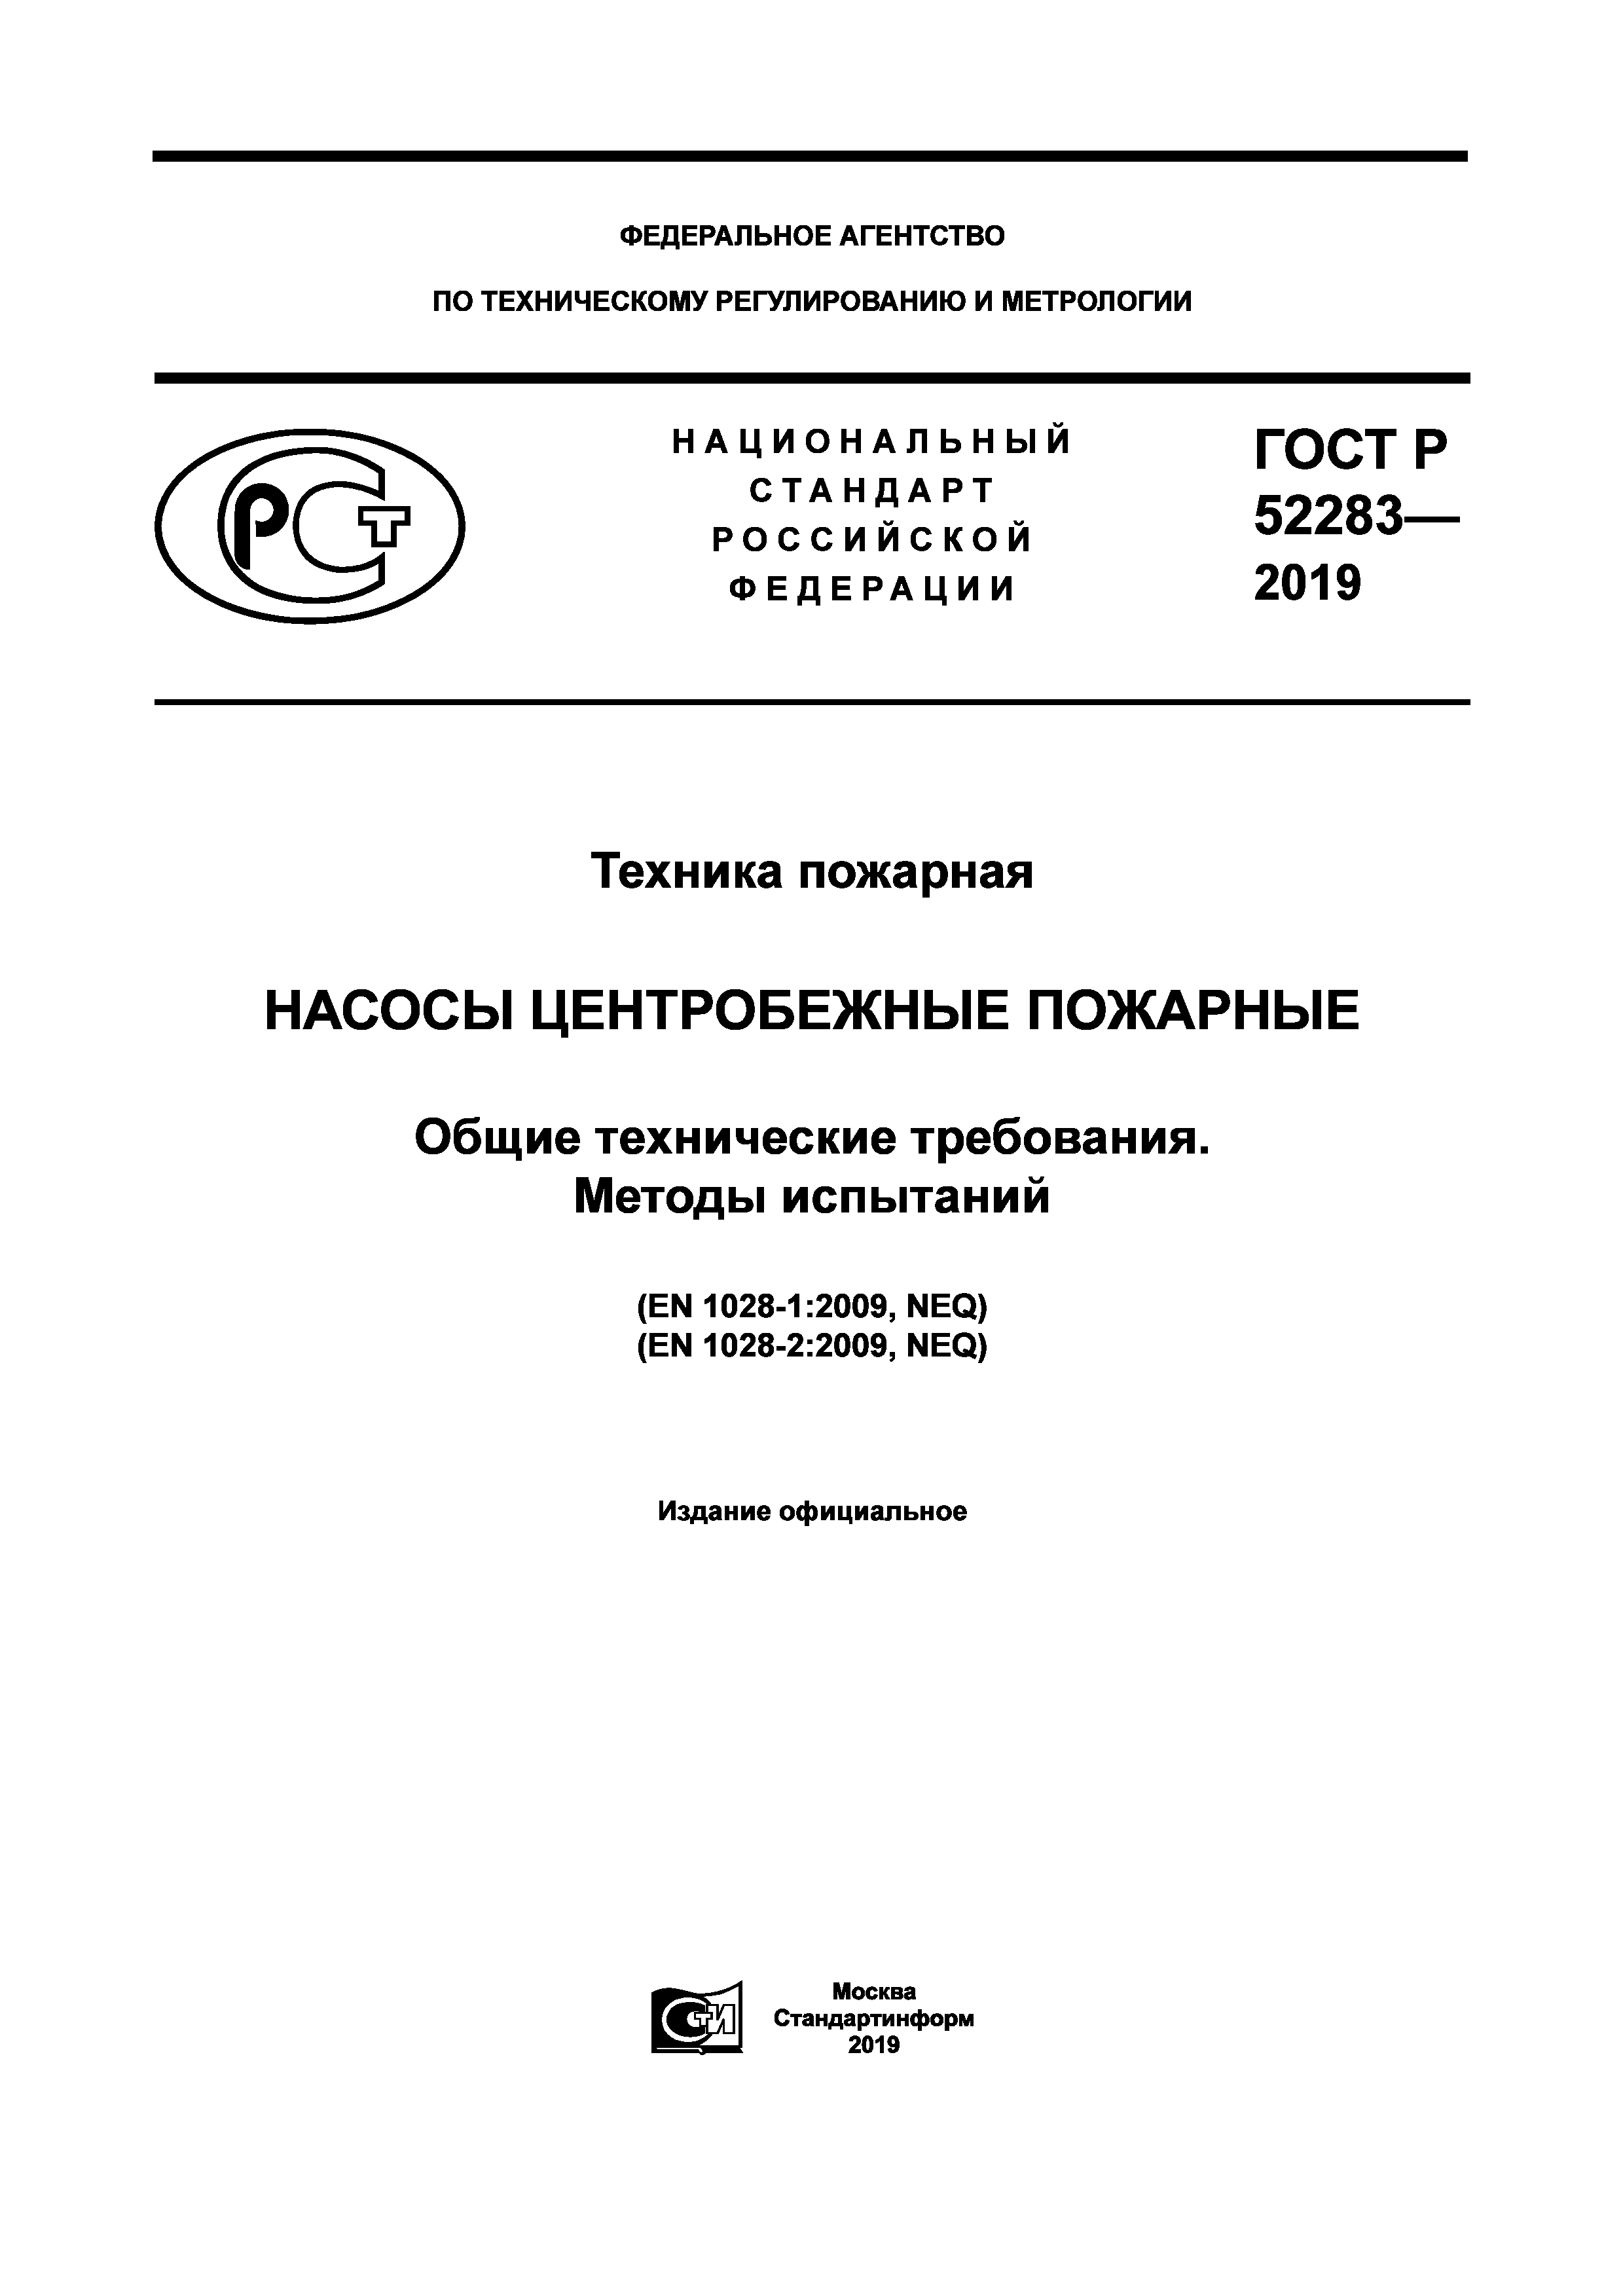 ГОСТ Р 52283-2019